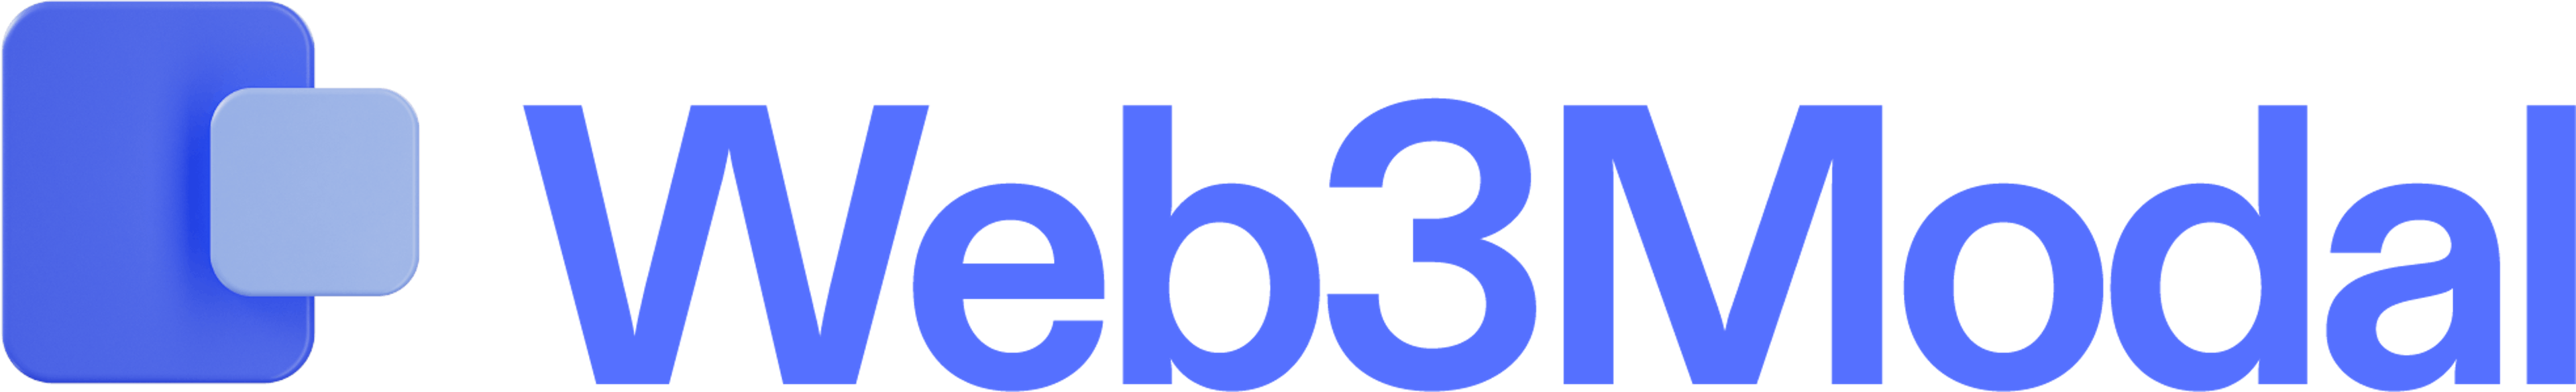 Web3Modal logo